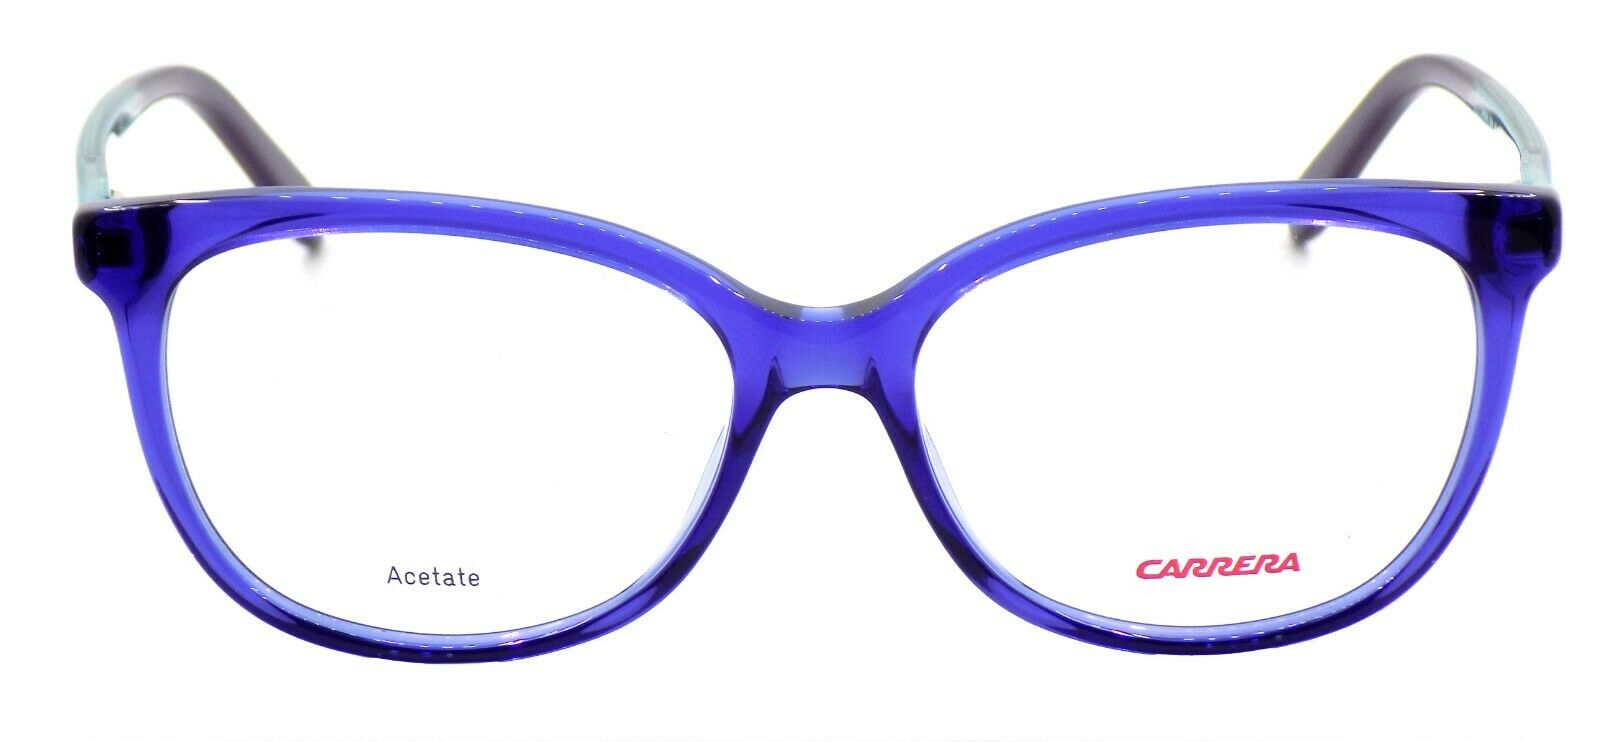 2-Carrera CA6648 QKA Women's Eyeglasses Frames 51-15-140 Blue / Turquoise + CASE-762753671462-IKSpecs